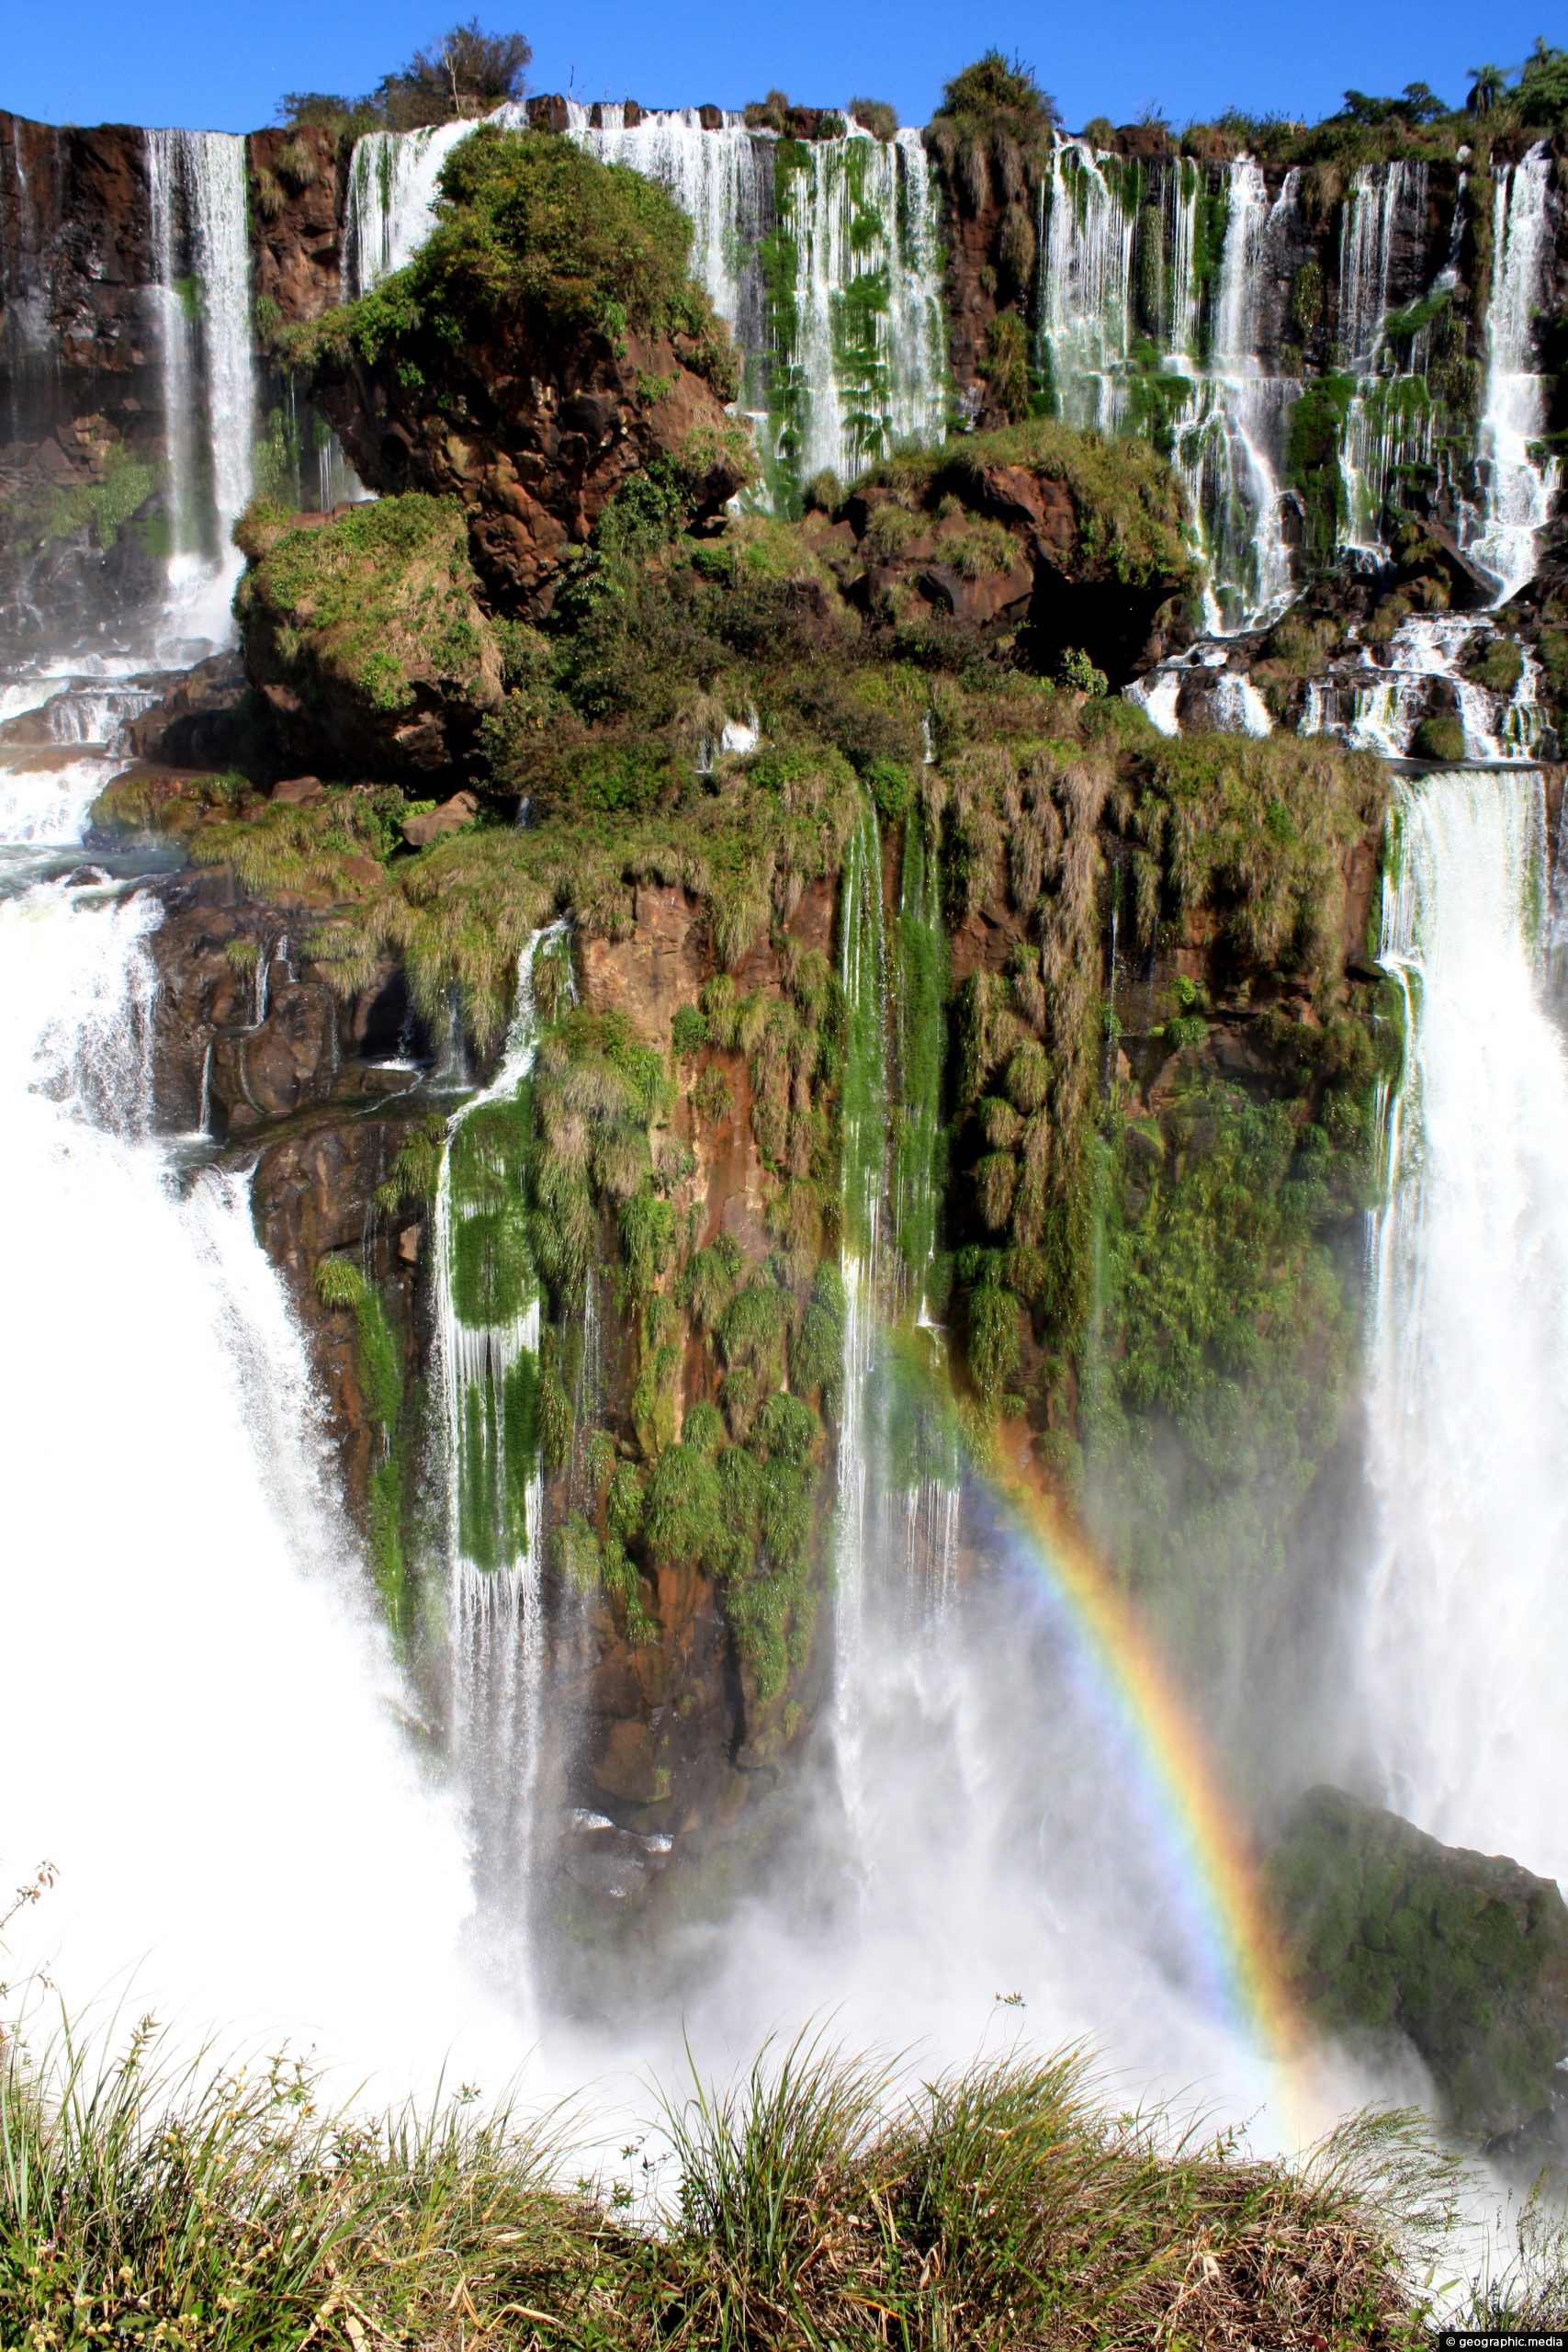 A section of waterfalls at Iguazu Falls